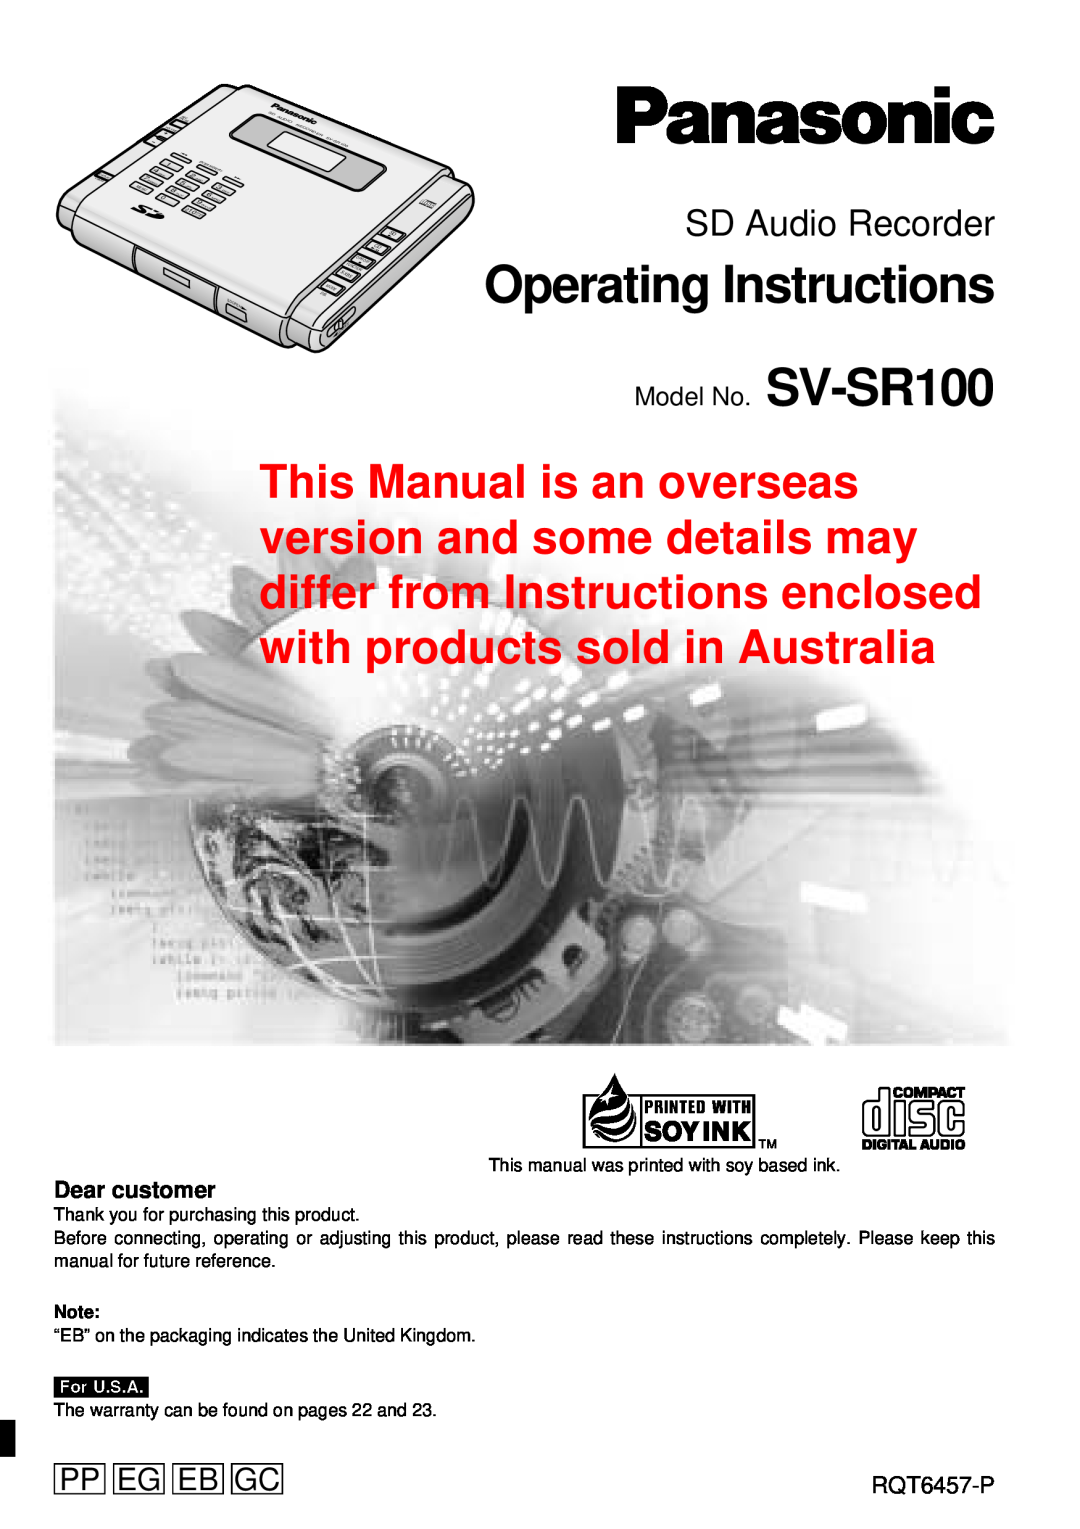 Panasonic operating instructions Operating Instructions, SD Audio Recorder, Model No. SV-SR100, For\U.S.A, RQT6457-P 